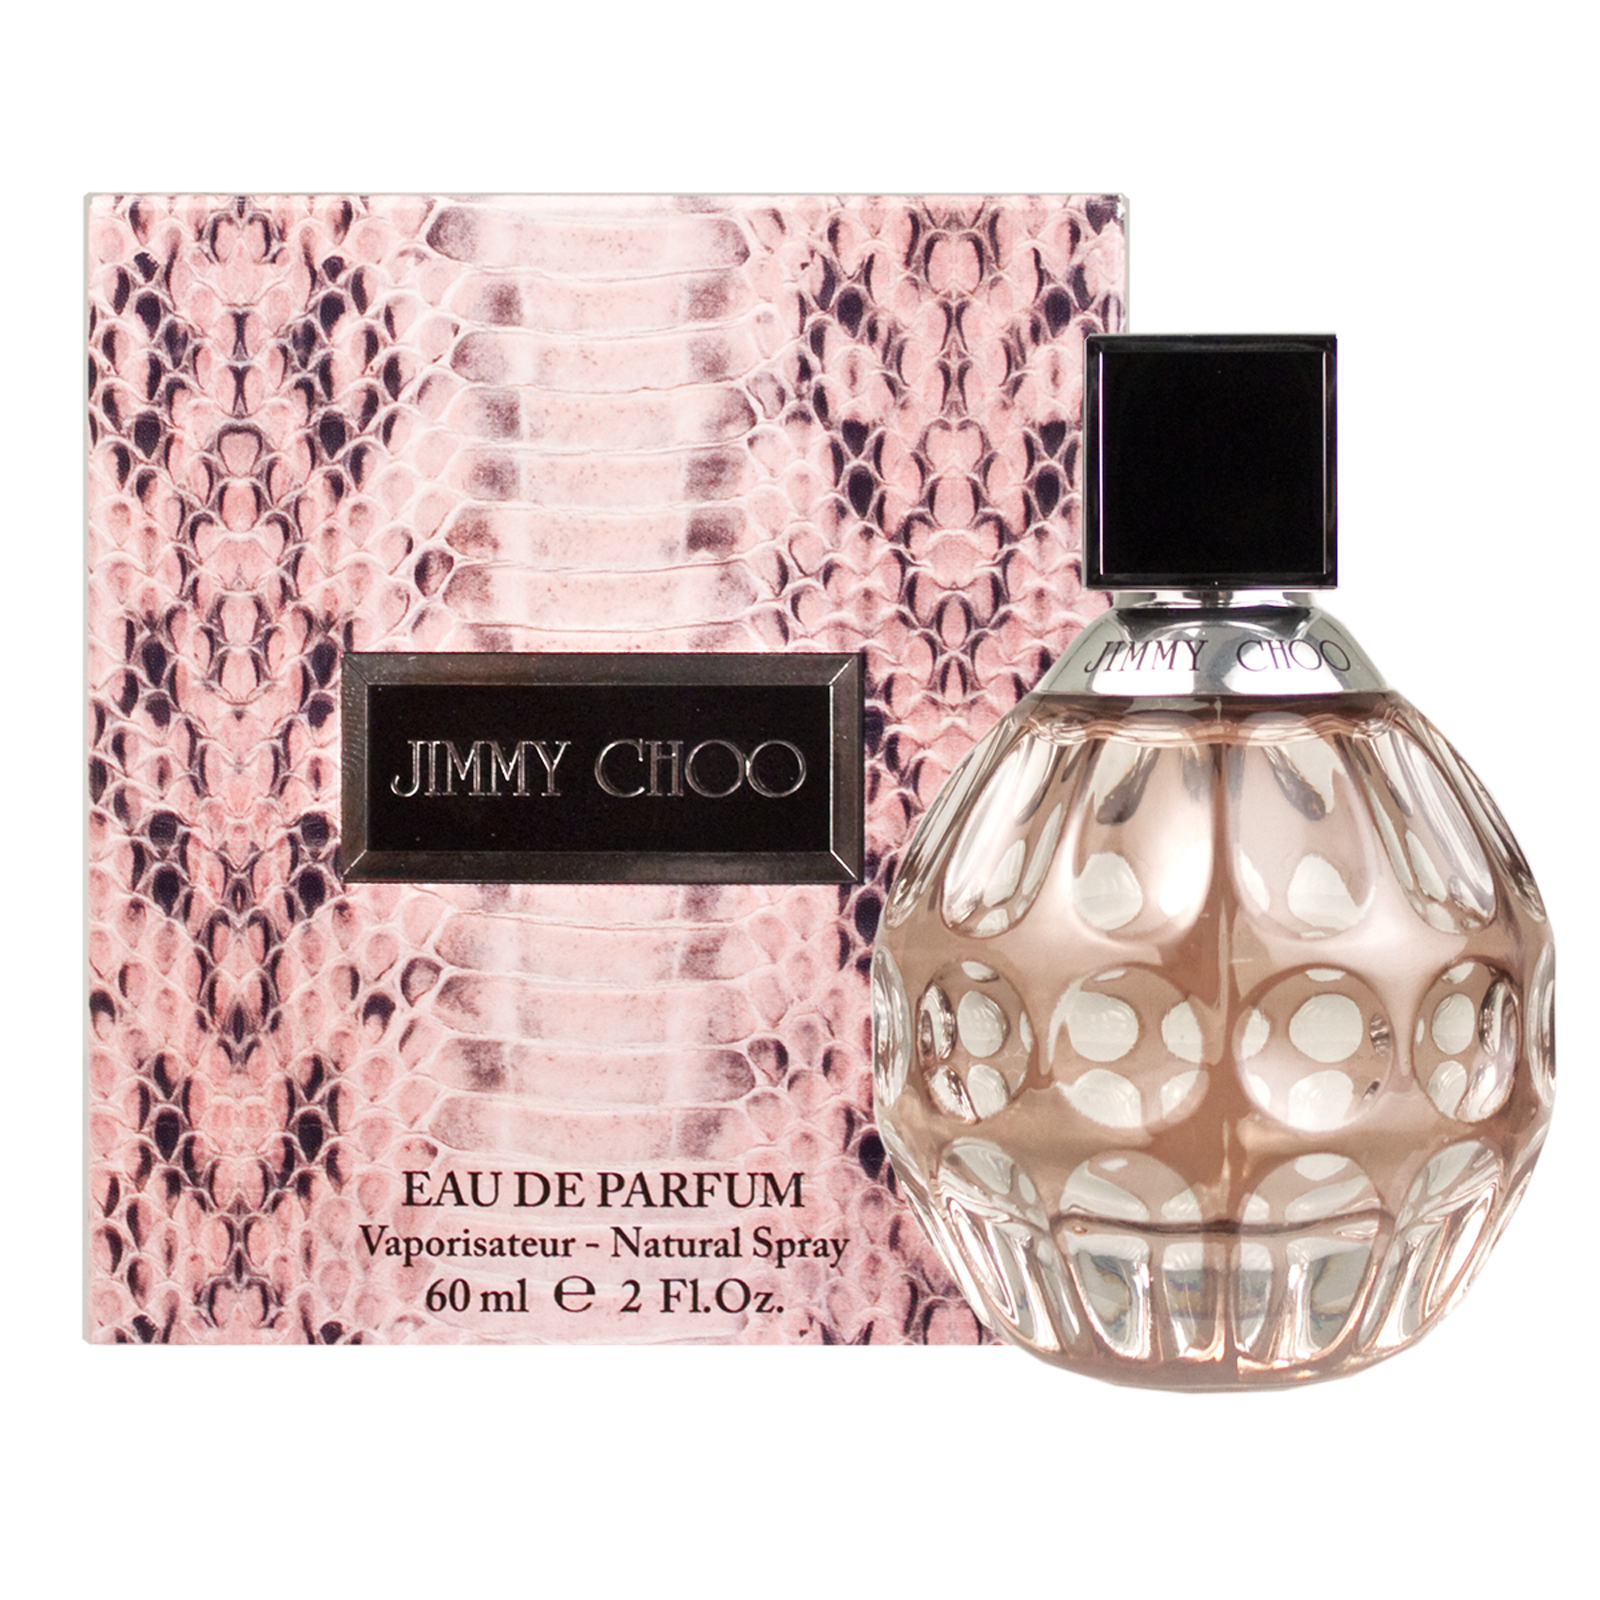 Jimmy Choo For Women 2 oz Eau de Parfum Spray By